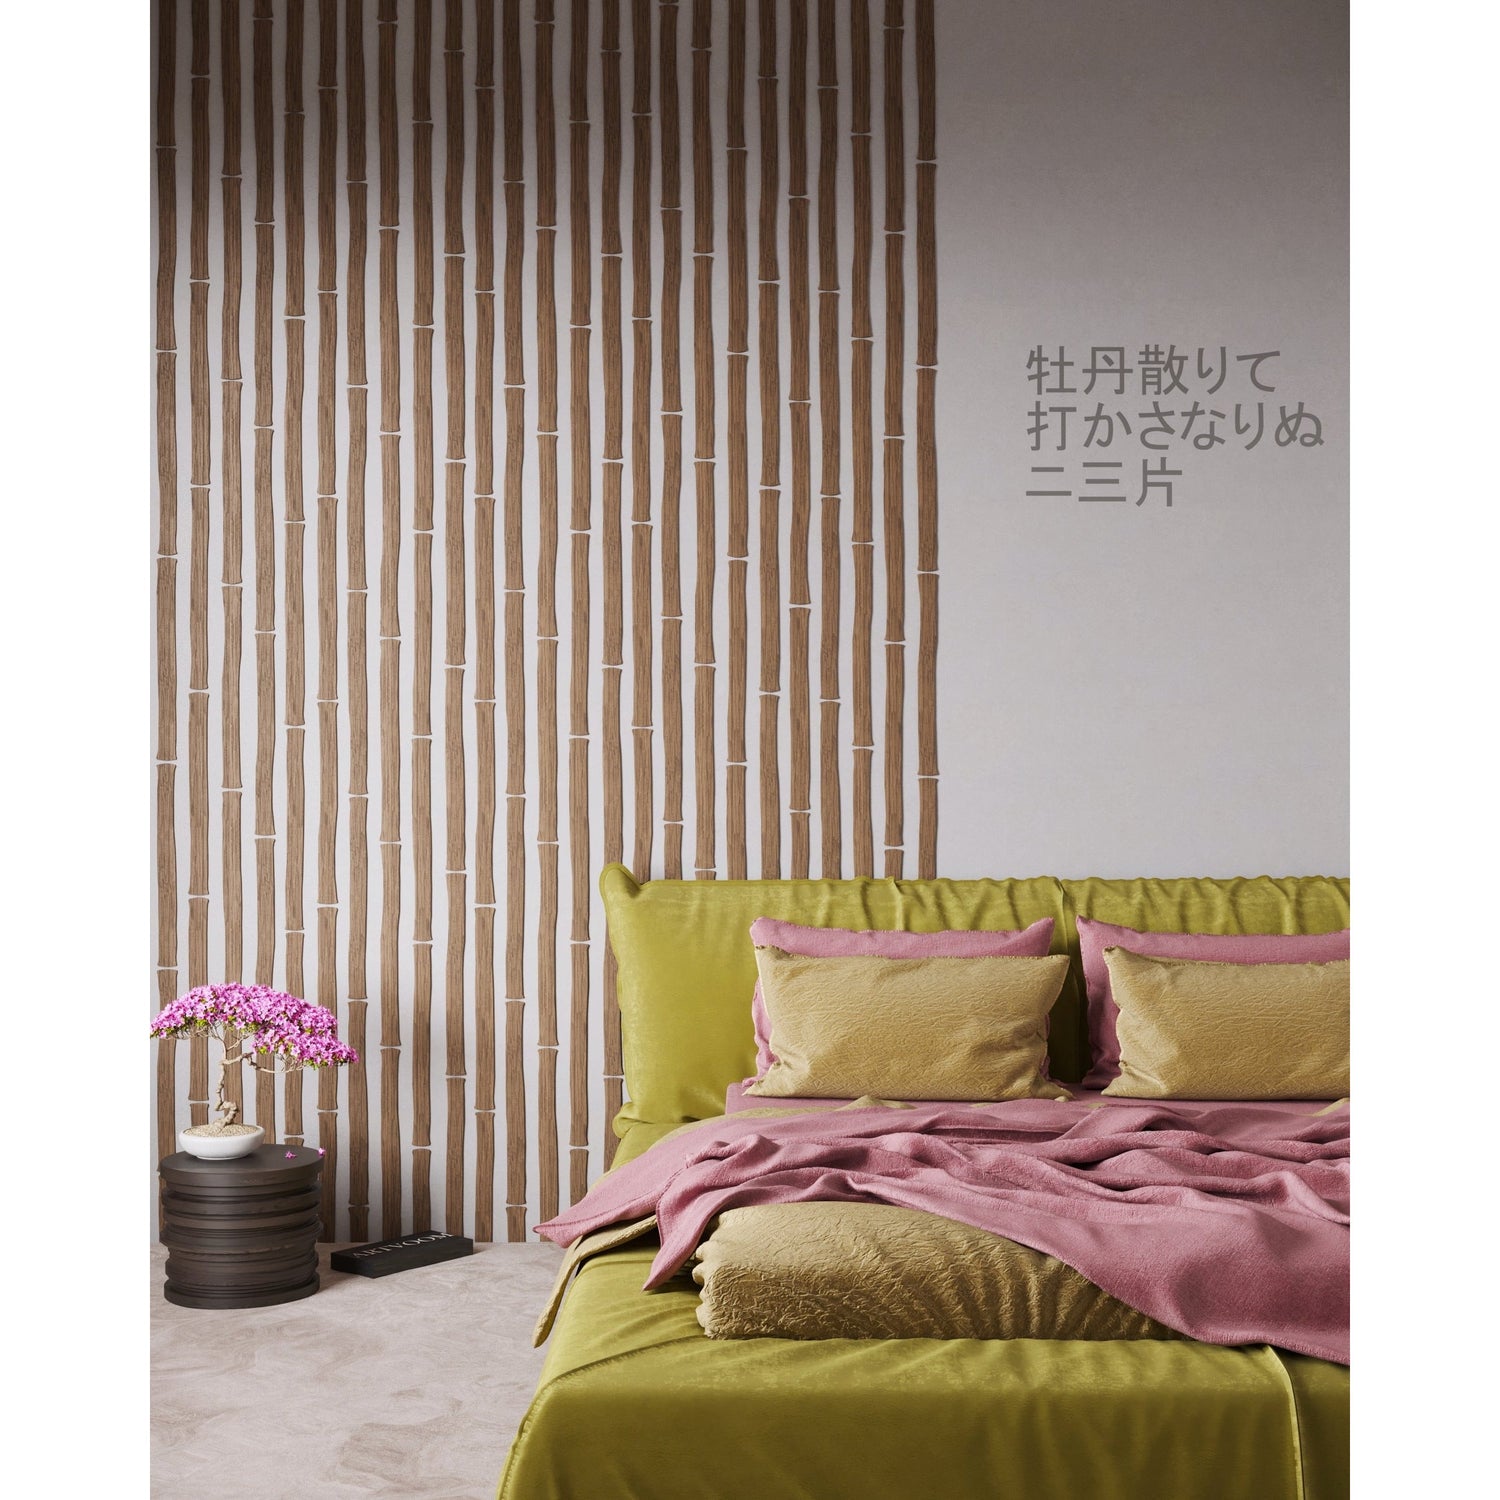 Bamboo Panel Wall Slat, Artvoom Wall Decor. 24 pcs in box - Artvoom